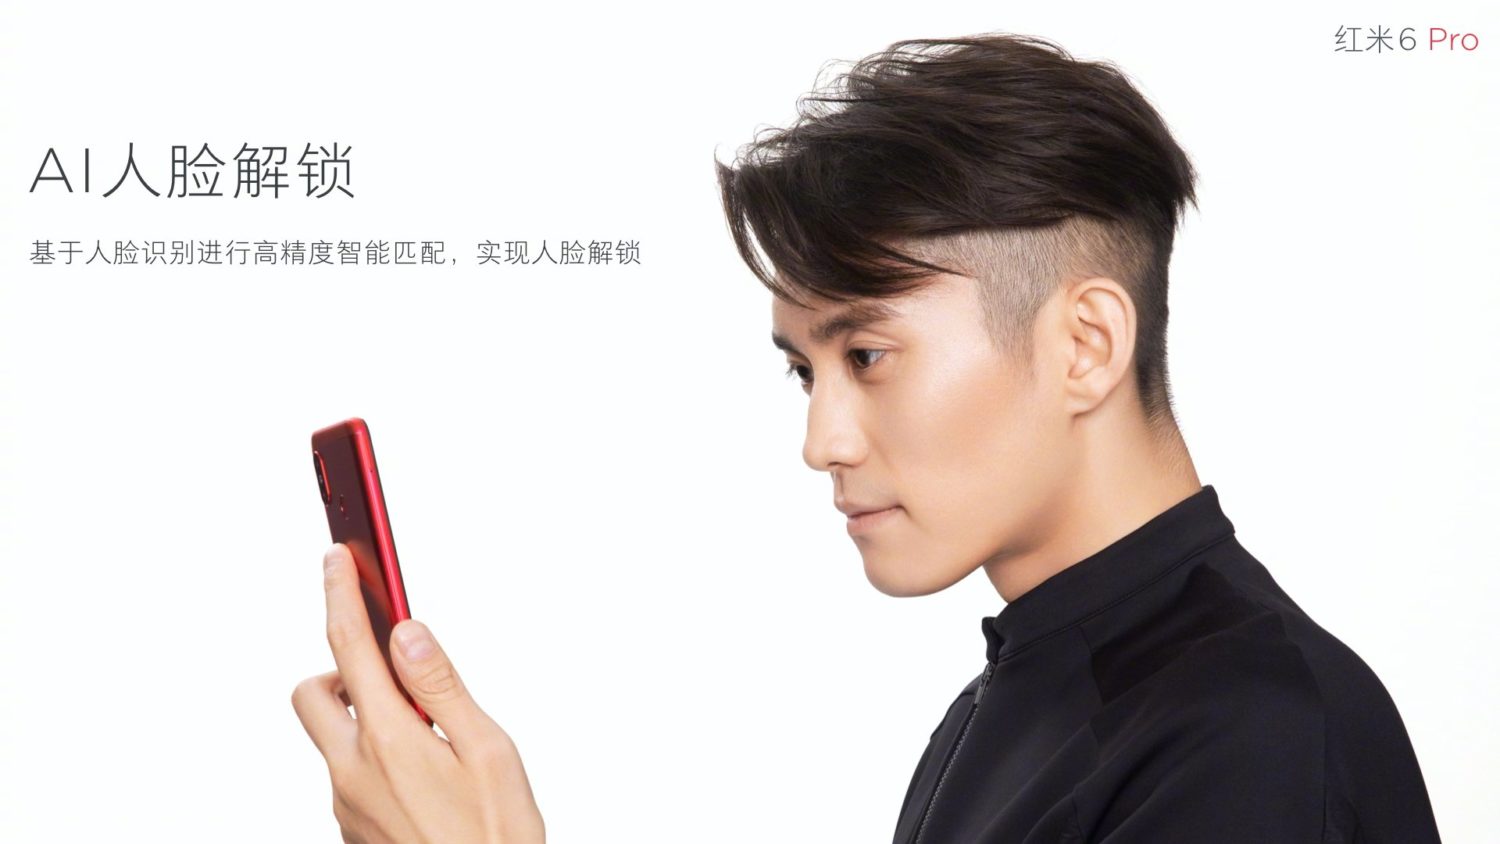 Xiaomi Redmi 6 Pro front camera